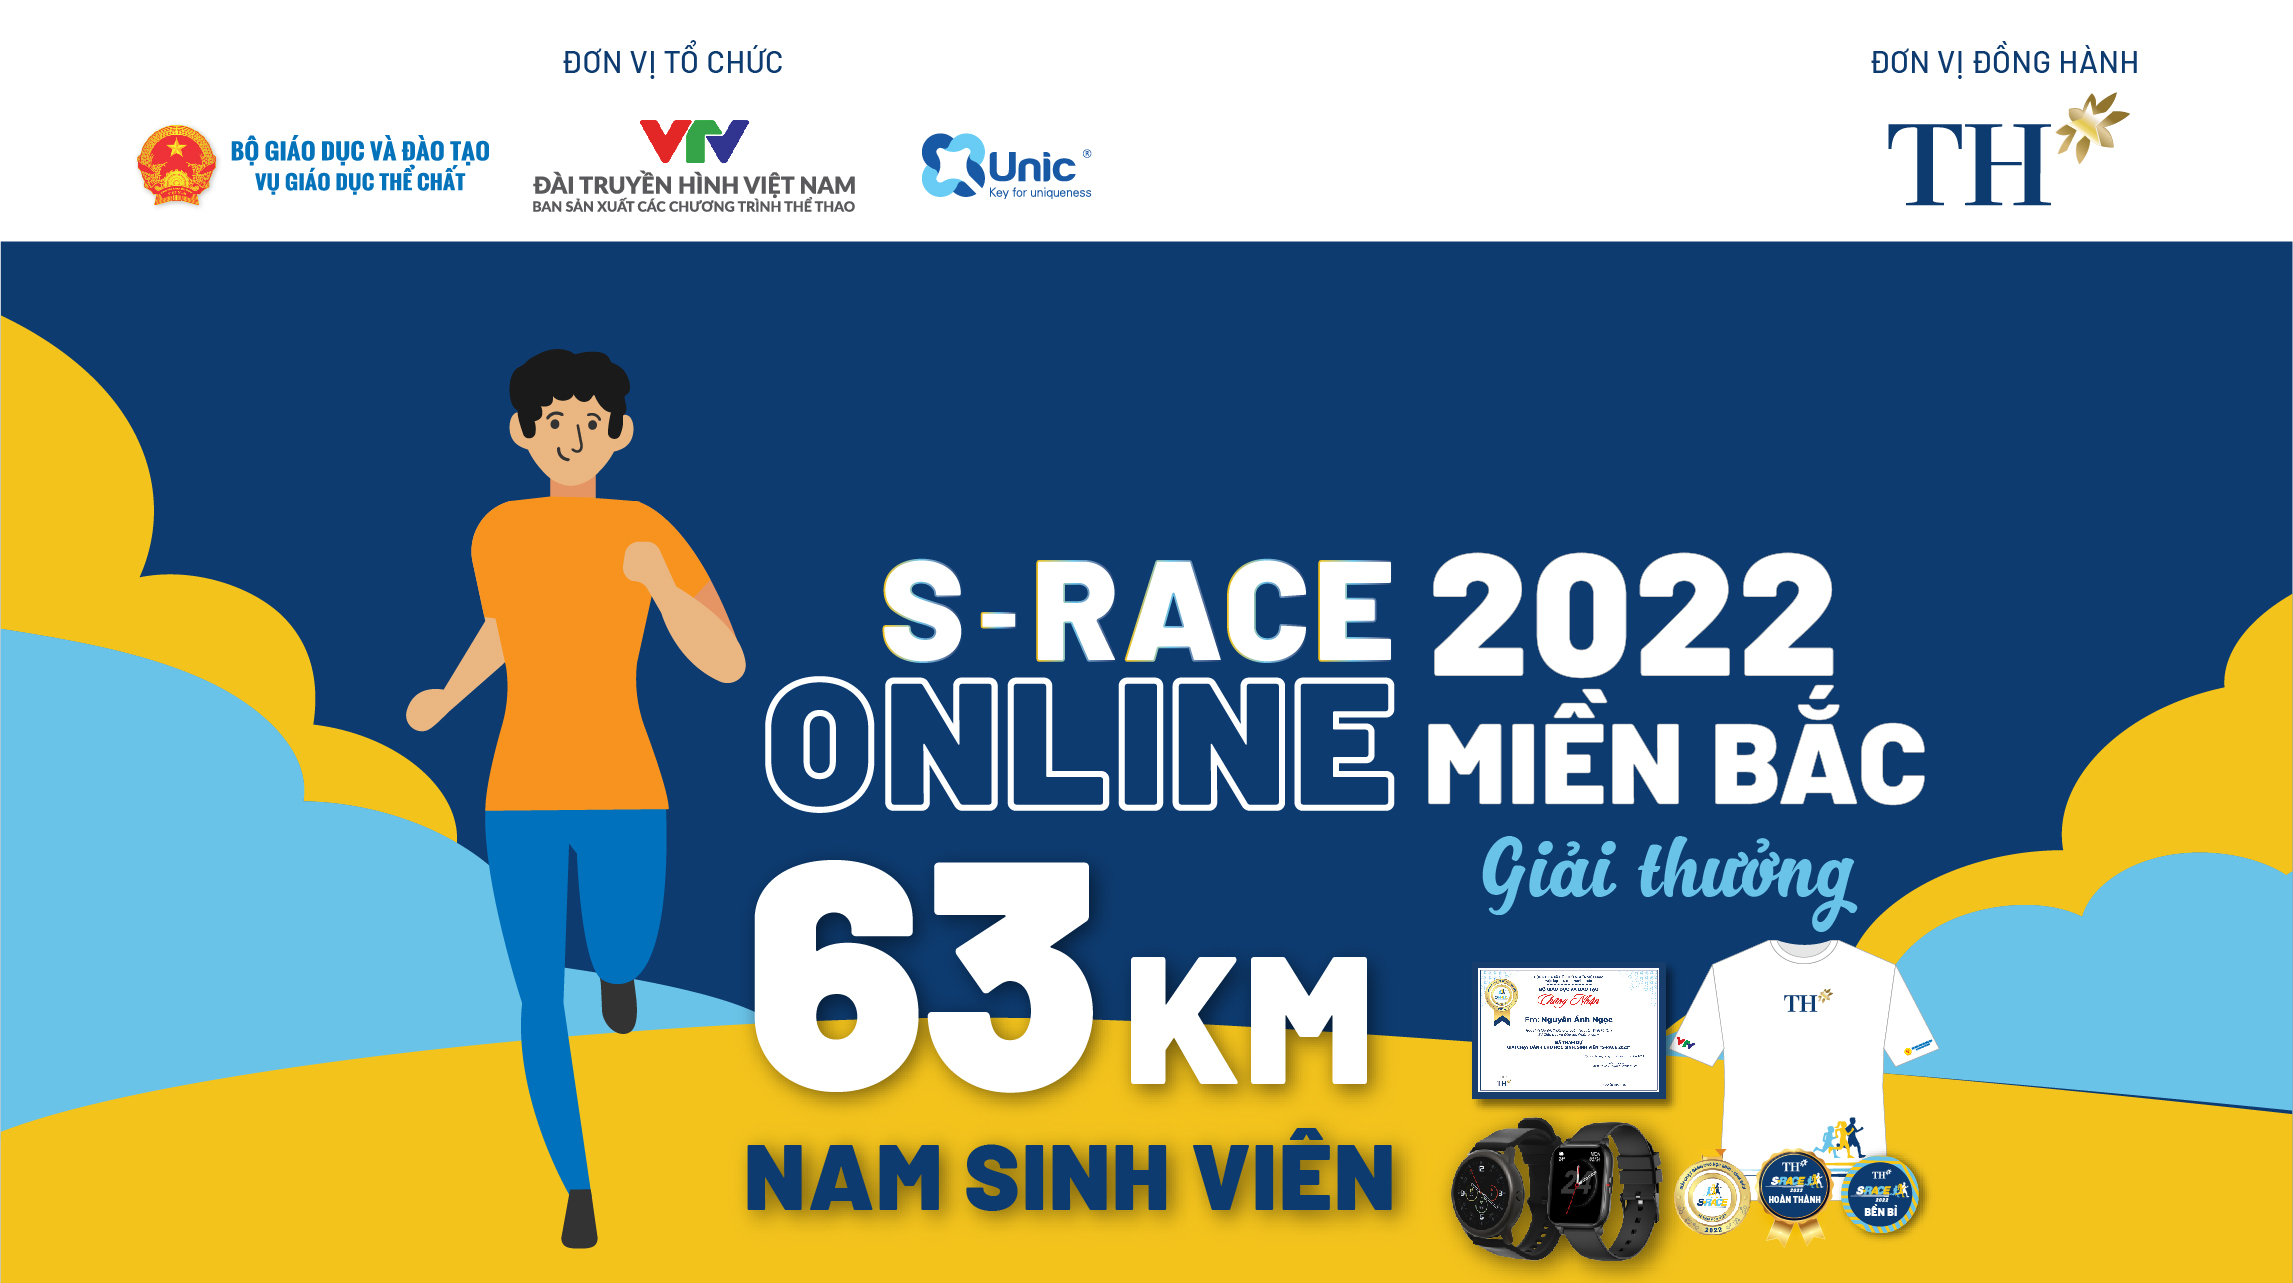 63 KM NAM SINH VIÊN (S-Race Online miền Bắc) - Unlimited Chain